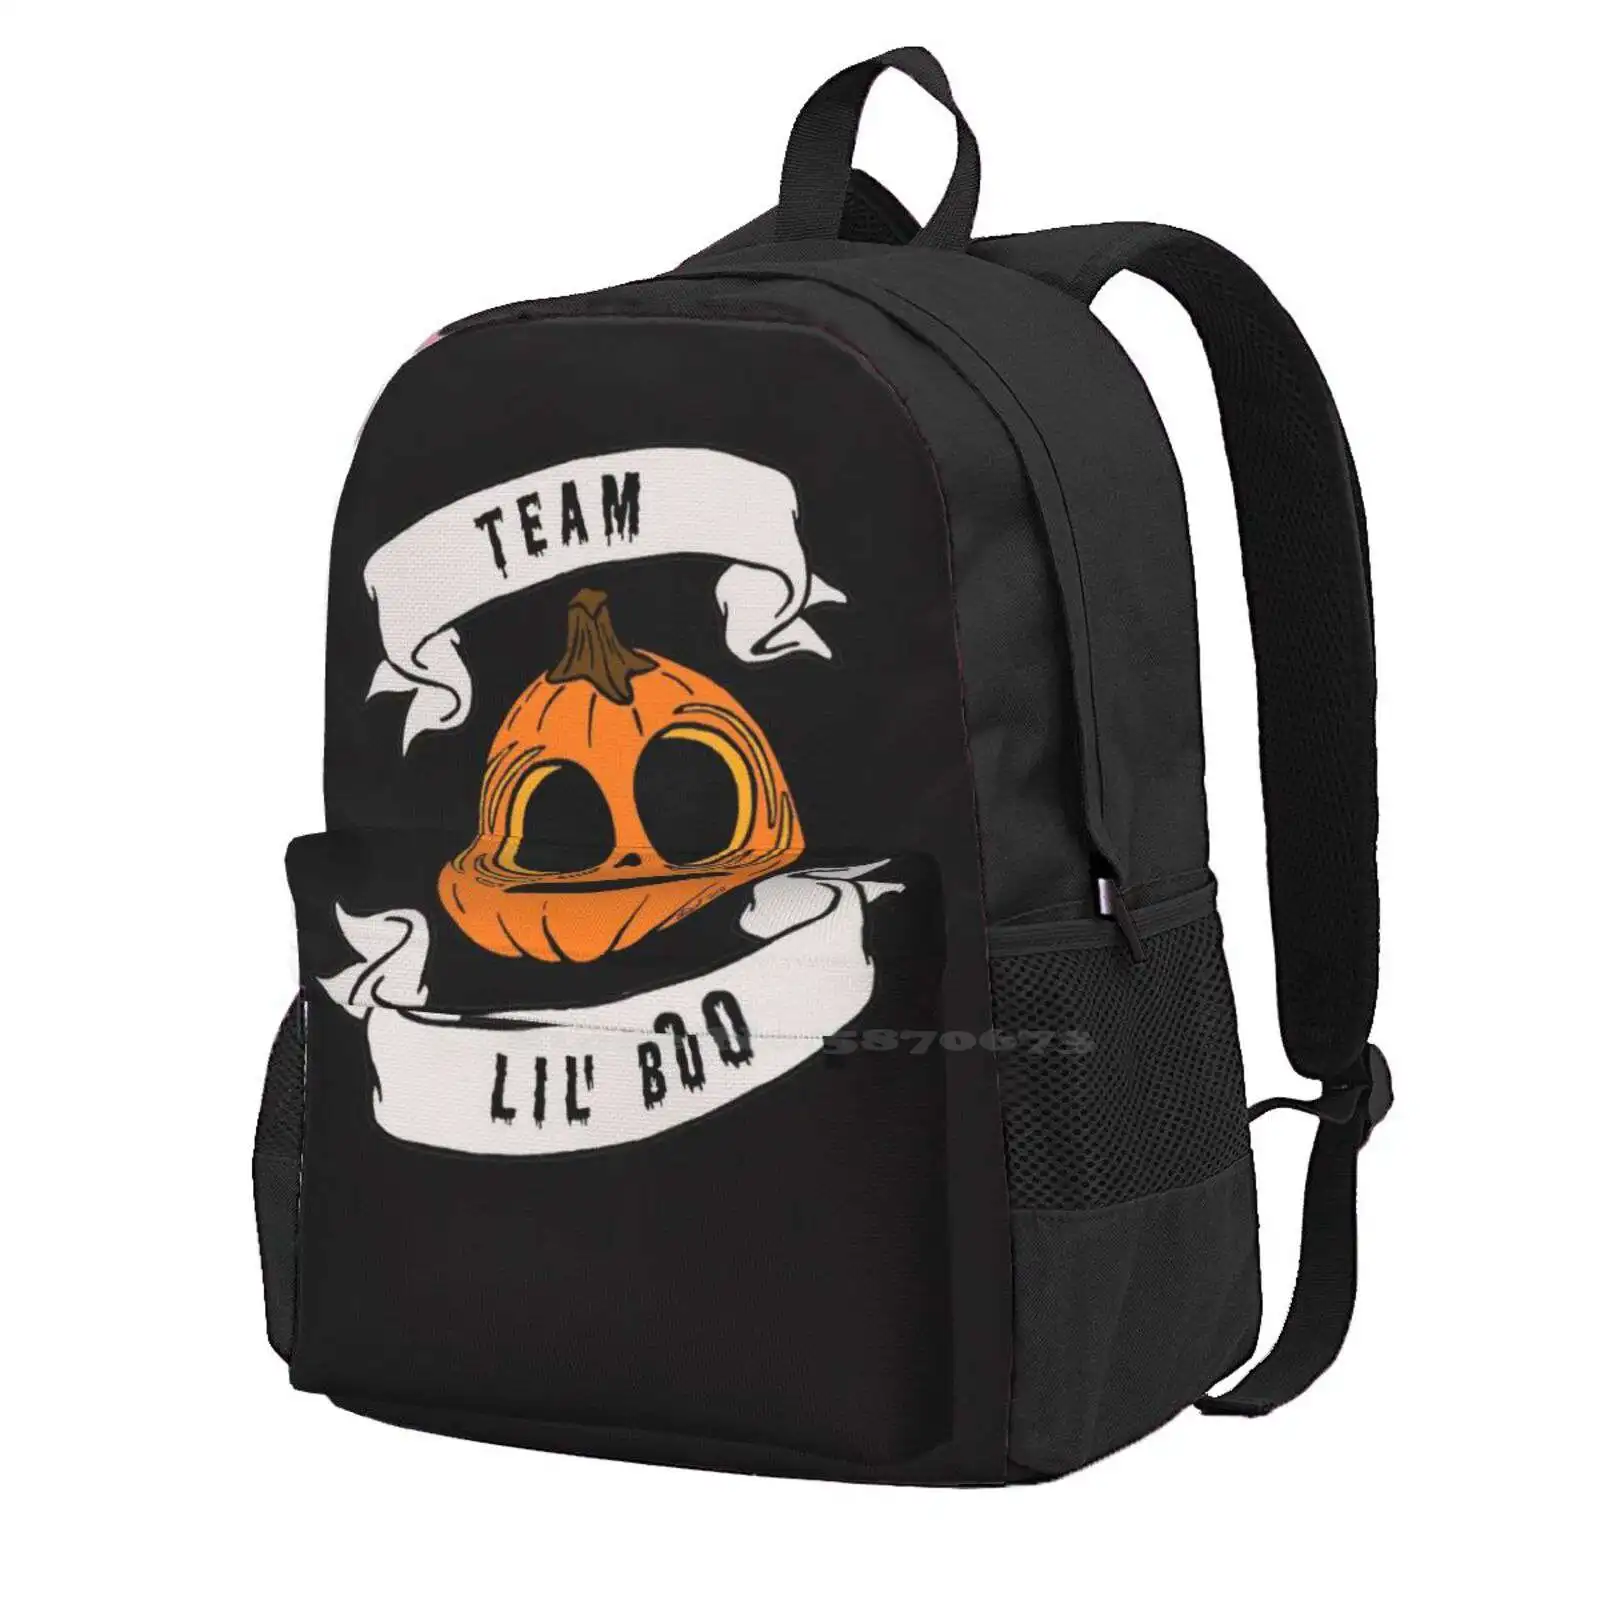 

Team Lil Boo Bag Backpack For Men Women Girls Teenage Hhn Lil Boo Halloween Pumpkins Wicked Growth